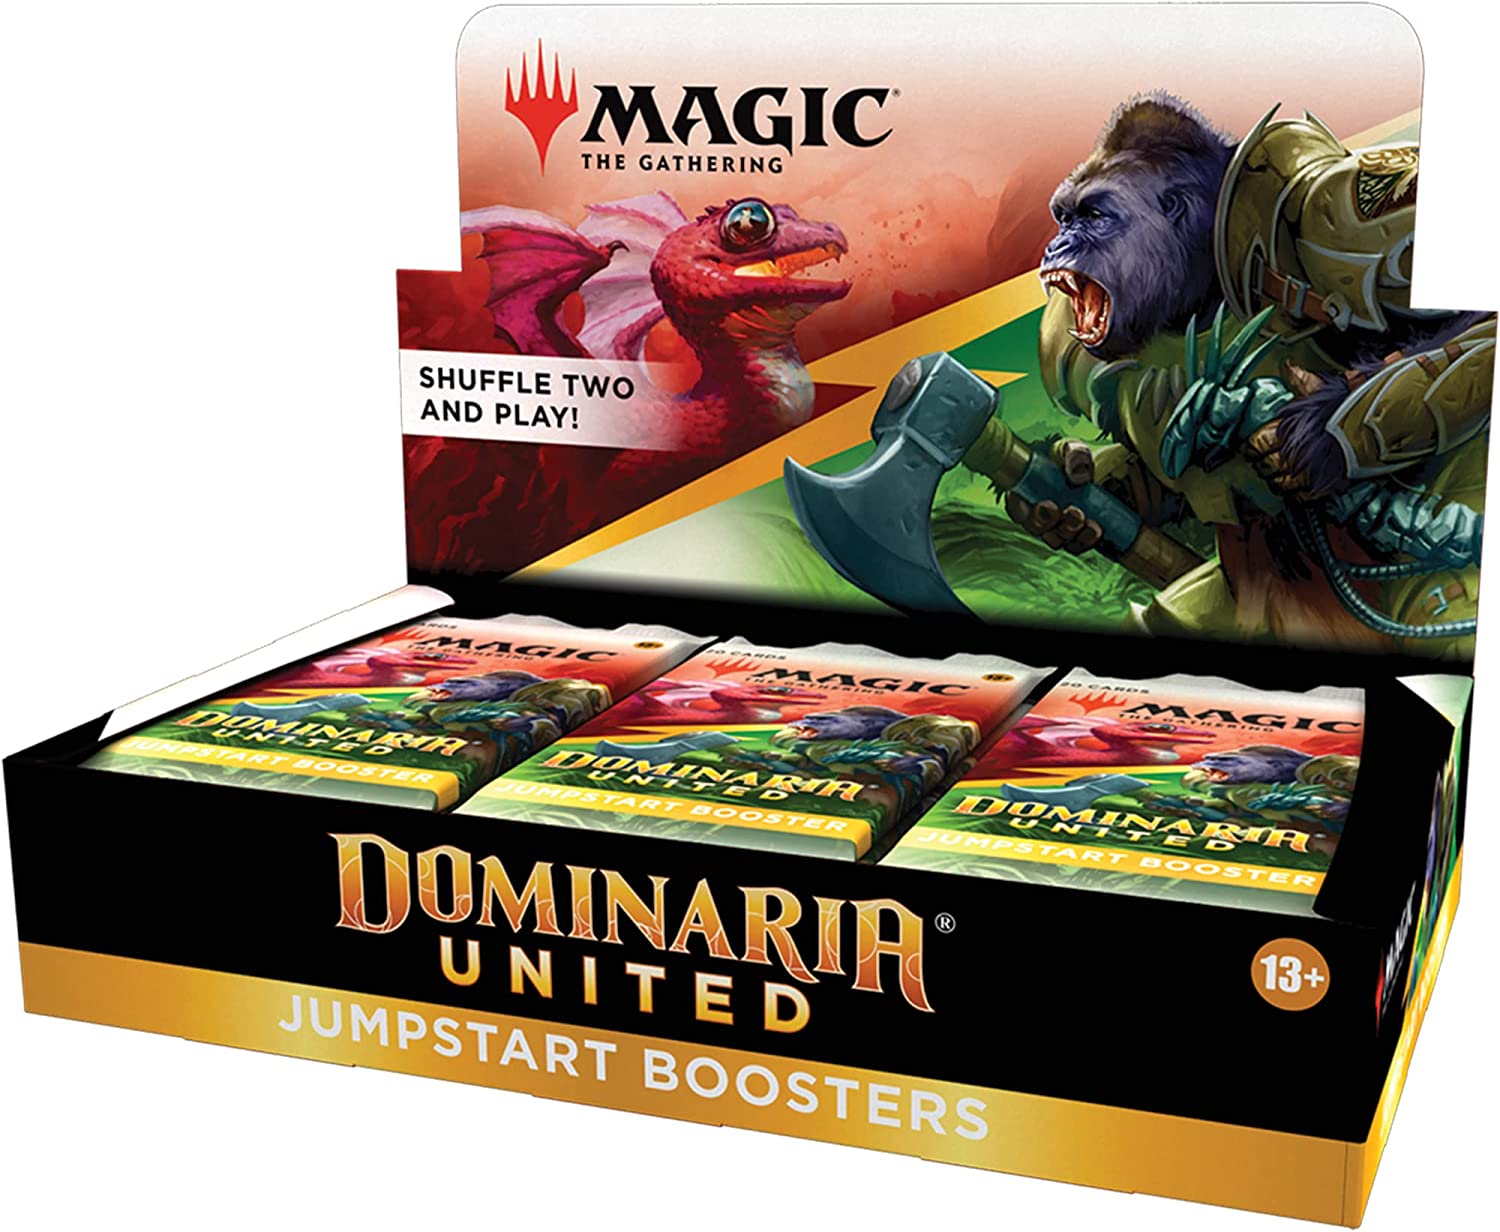 Magic the Gathering: Dominaria United - Jumpstart Booster Box (18 Packs)